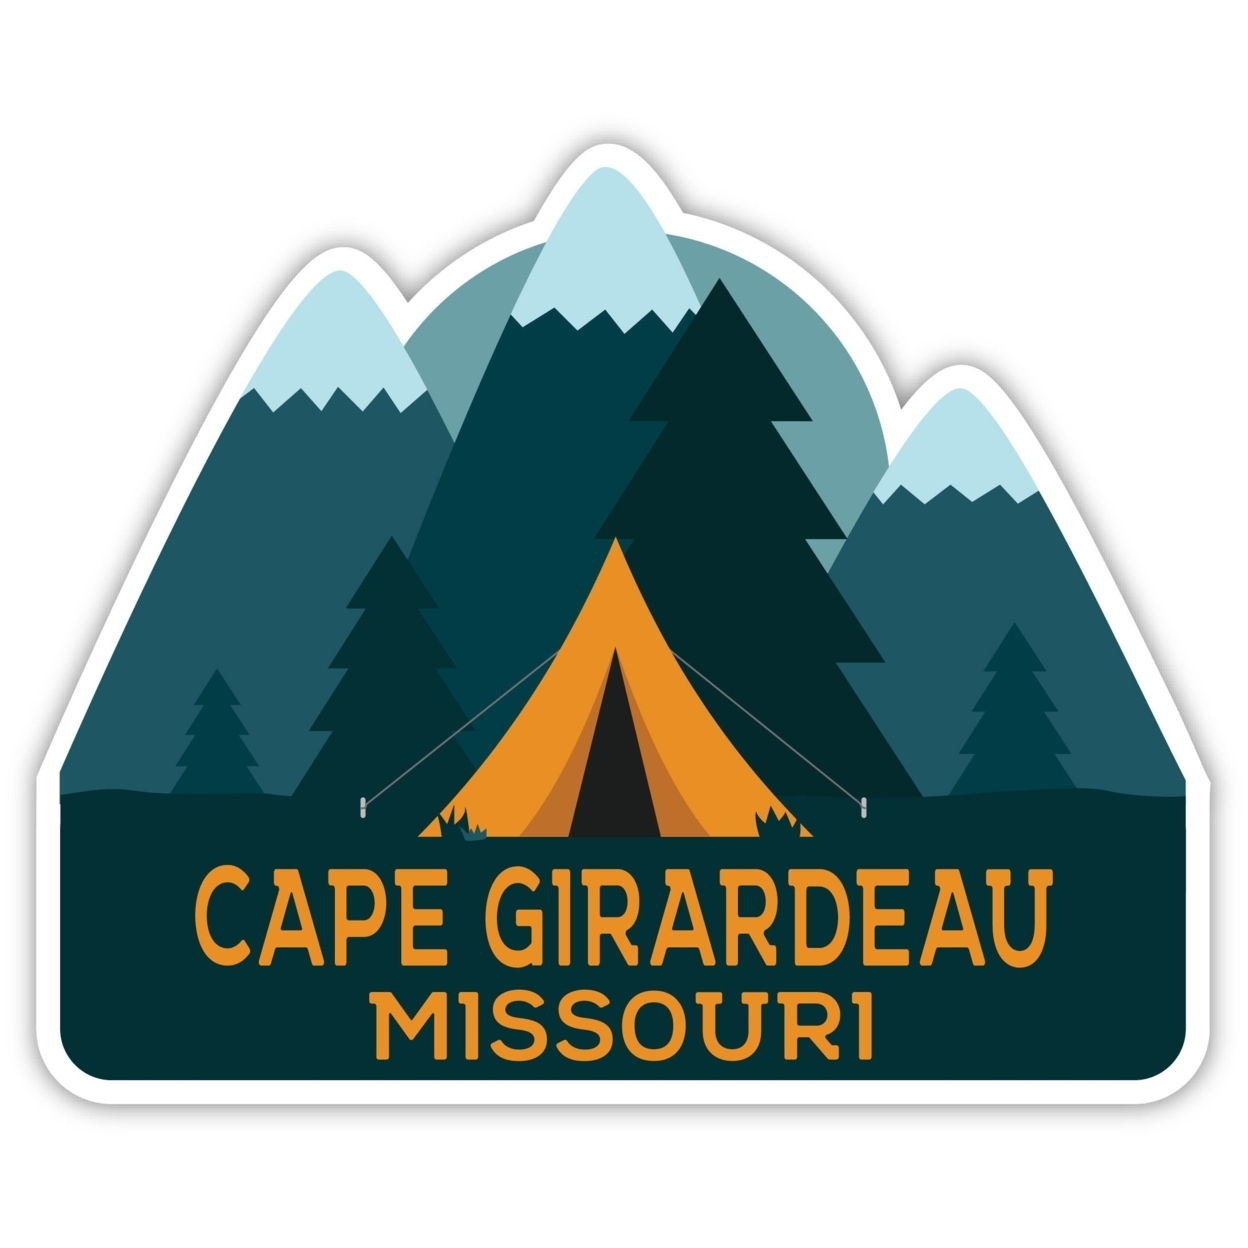 Cape Girardeau Missouri Souvenir Decorative Stickers (Choose Theme And Size) - 4-Pack, 4-Inch, Tent